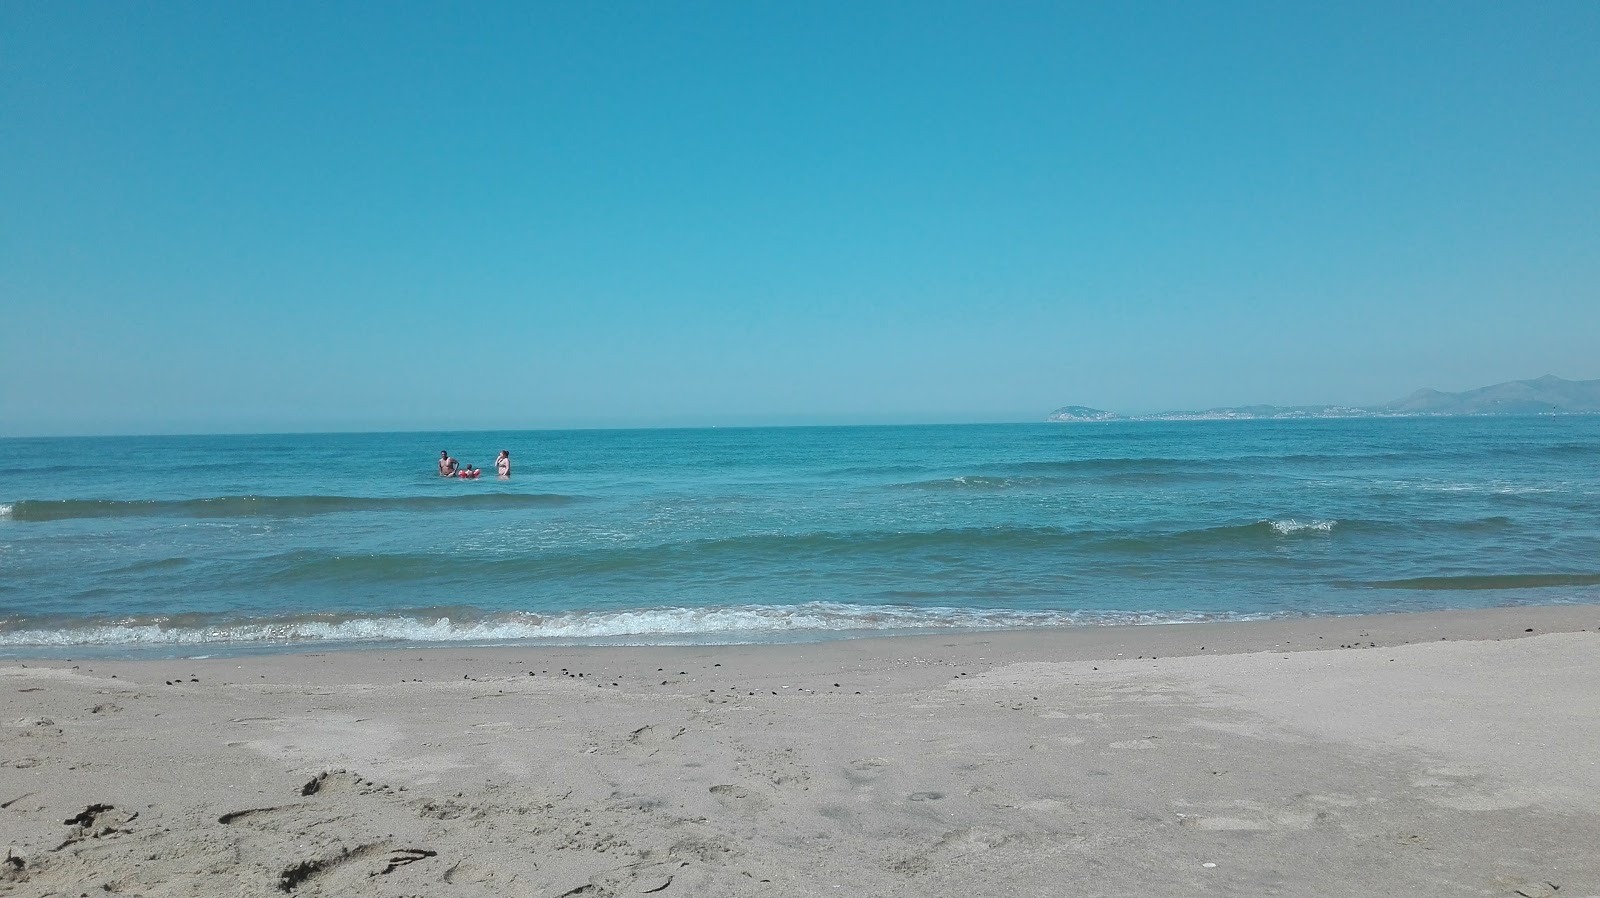 Fotografie cu Marina di Minturno beach - locul popular printre cunoscătorii de relaxare